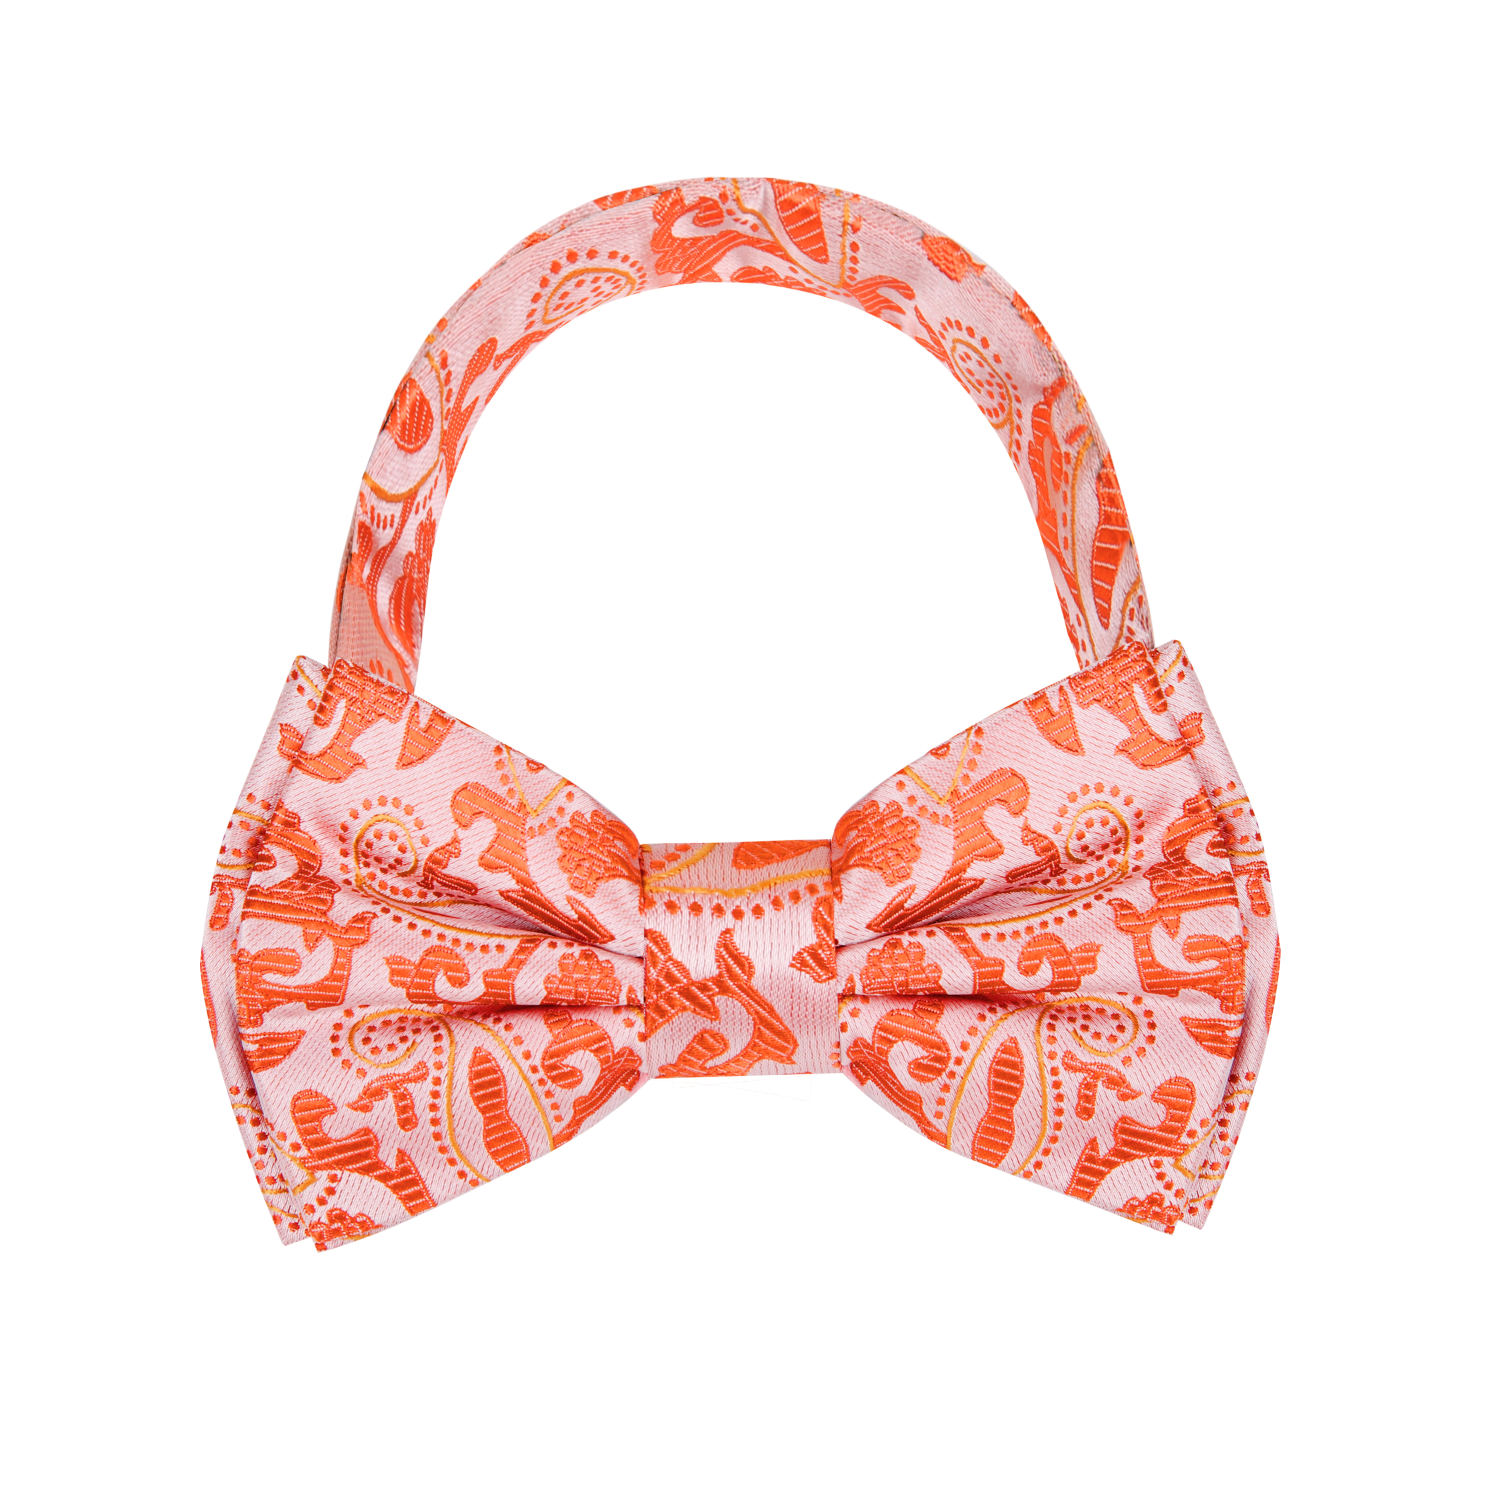 A Coral, Orange Paisley Pattern Silk Bow Tie pre Tied